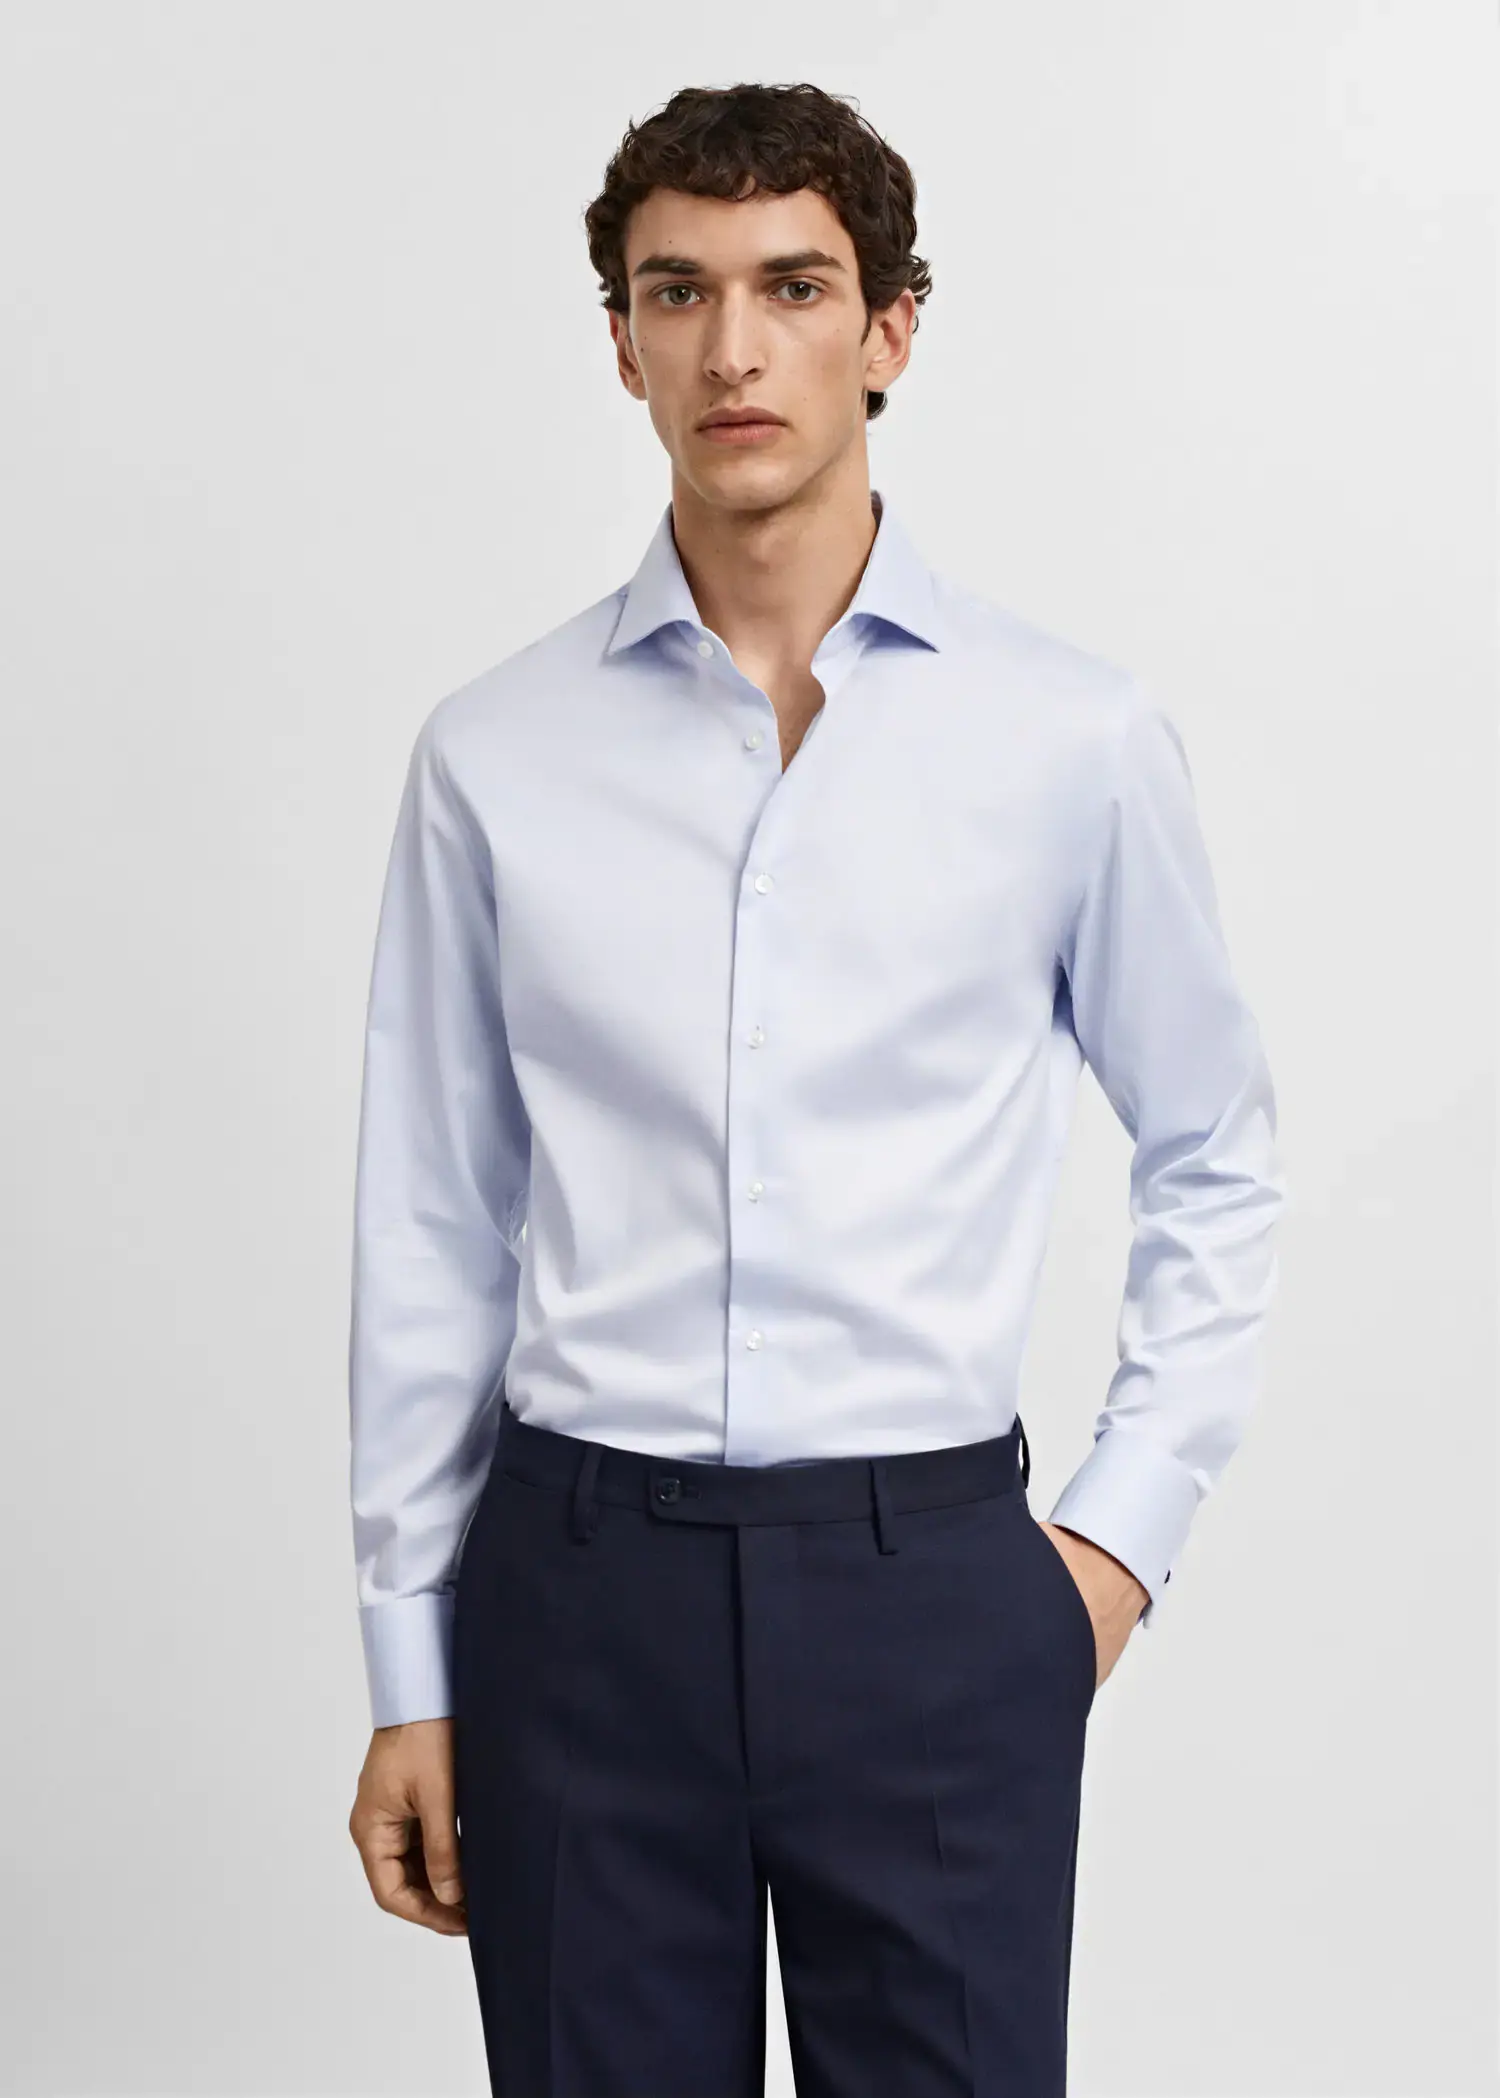 Mango Shirt cufflinks slim fit twill fabric suit. 2